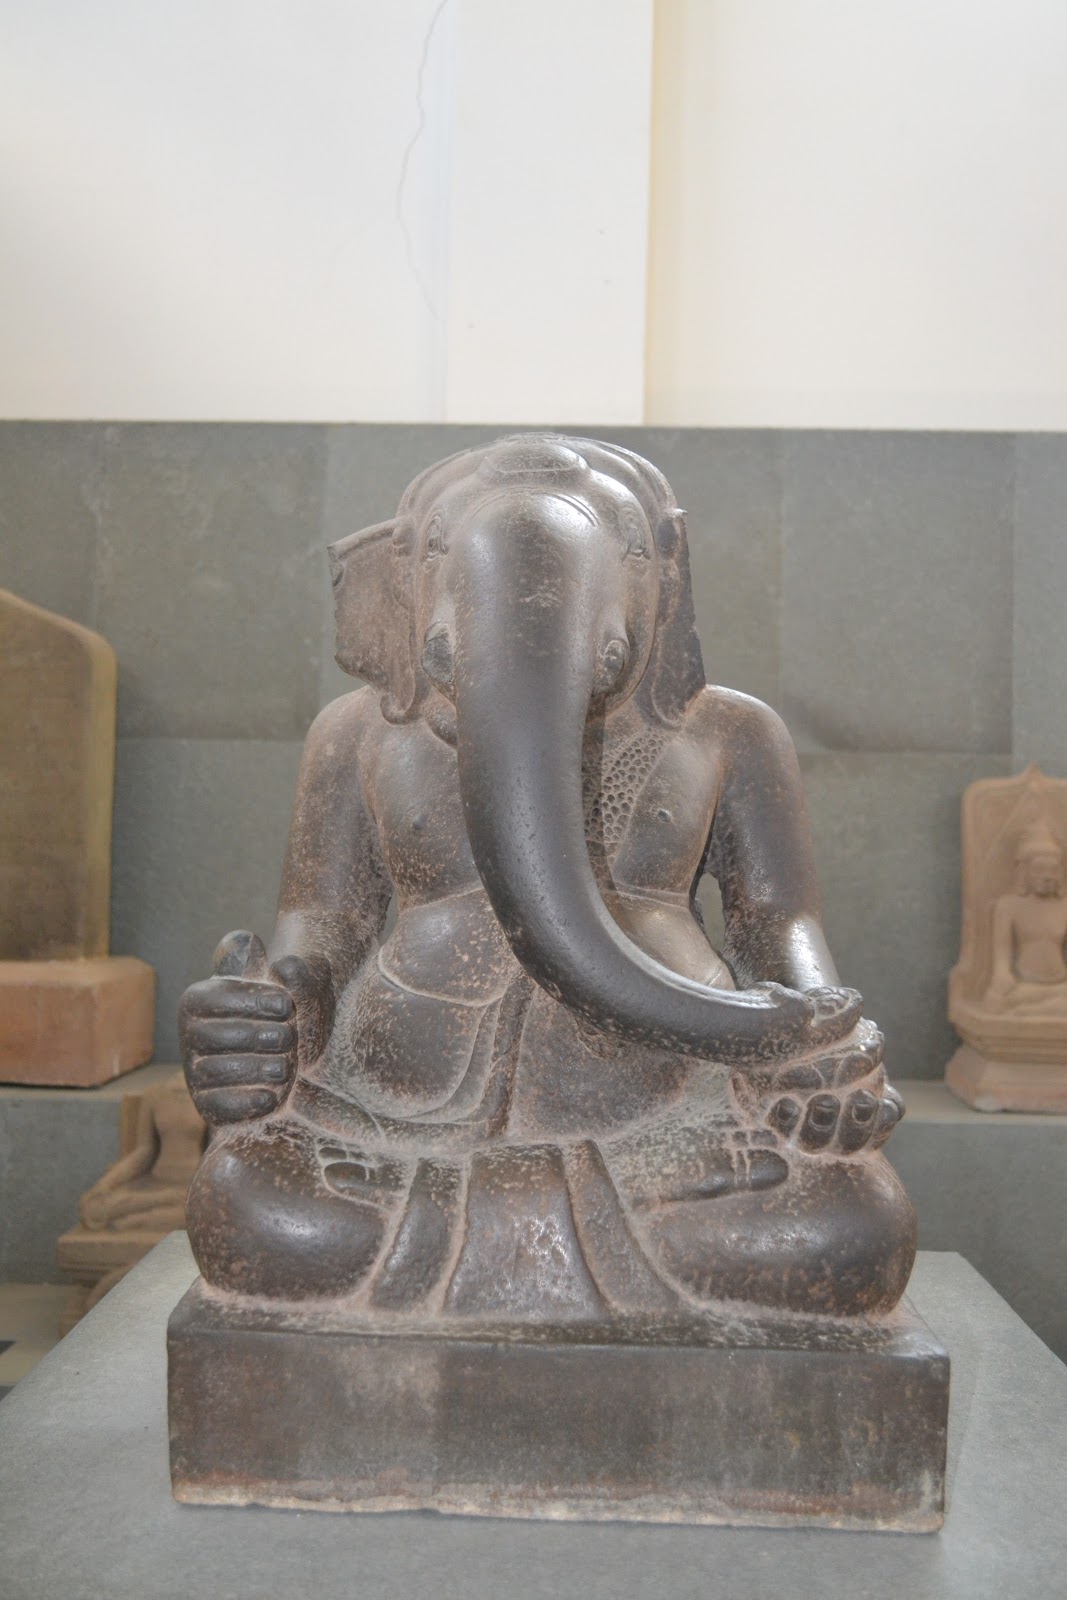 Lord Ganesha in cham museum, Danang